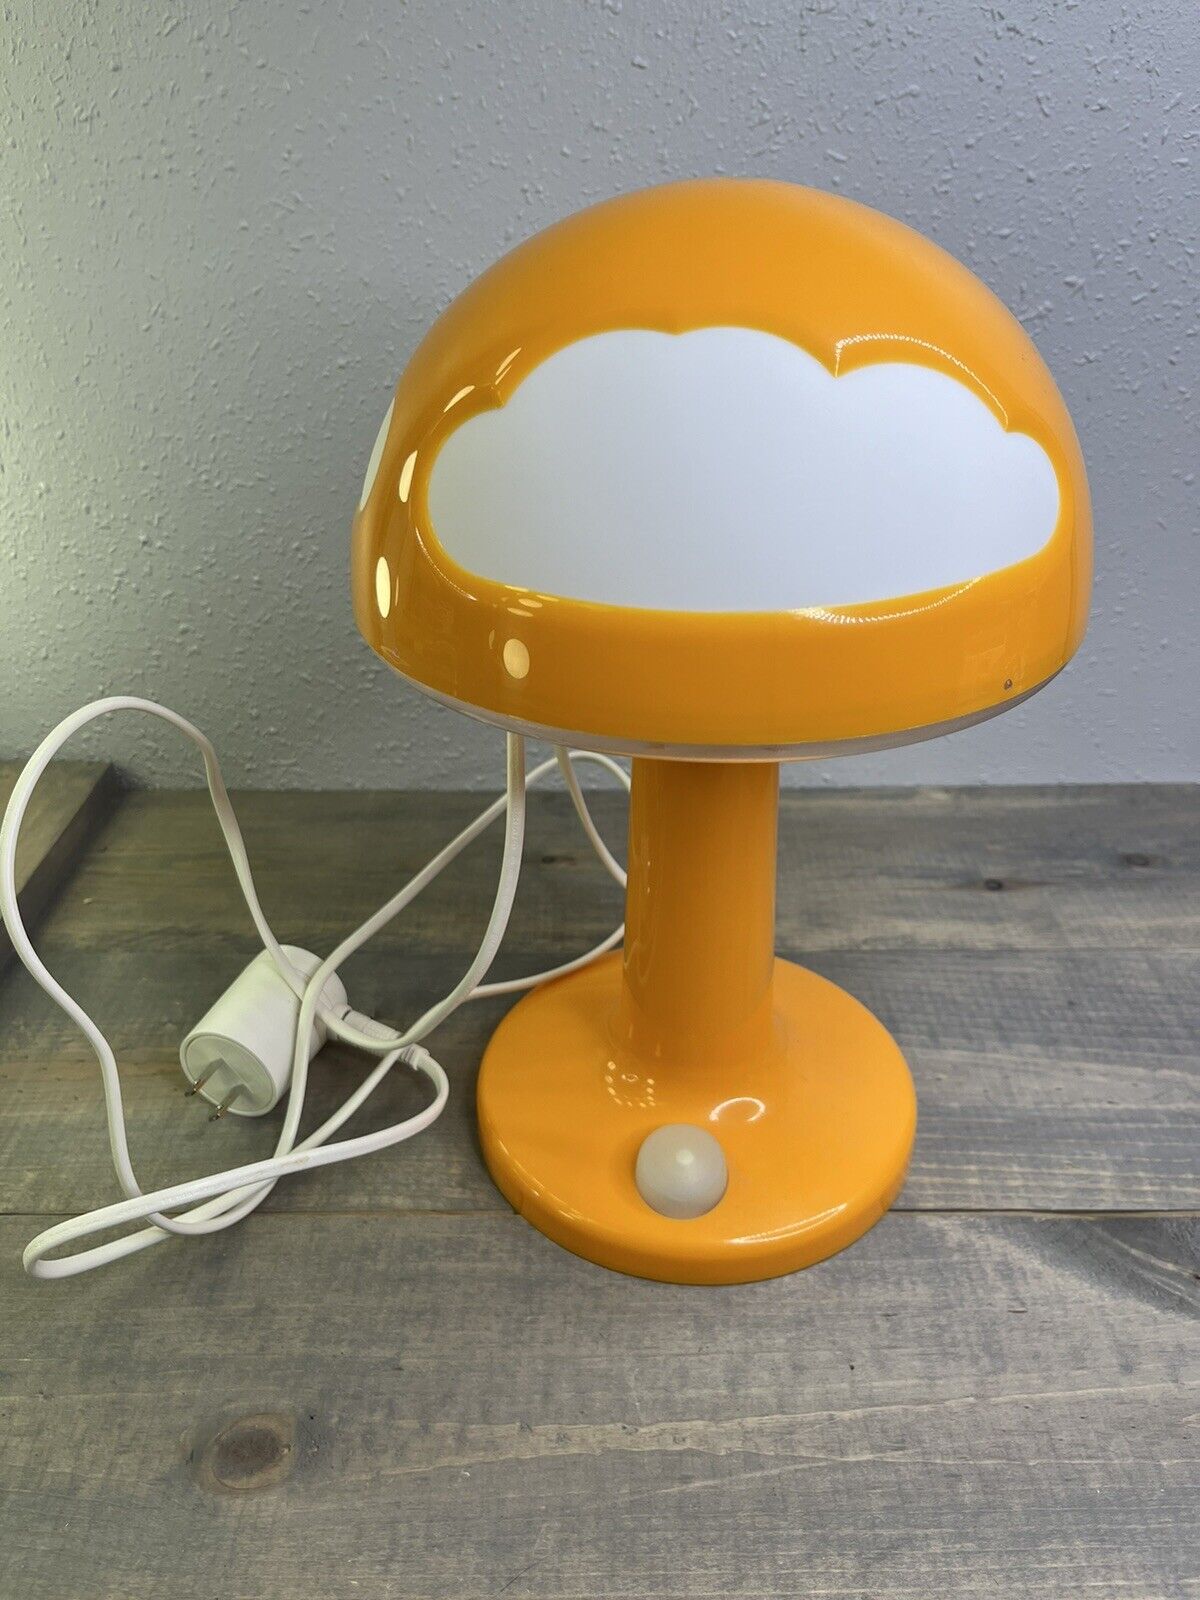 Ikea Skojig Orange Mushroom Cloud Lamp ~ Retro Mod MCM ~Excellent